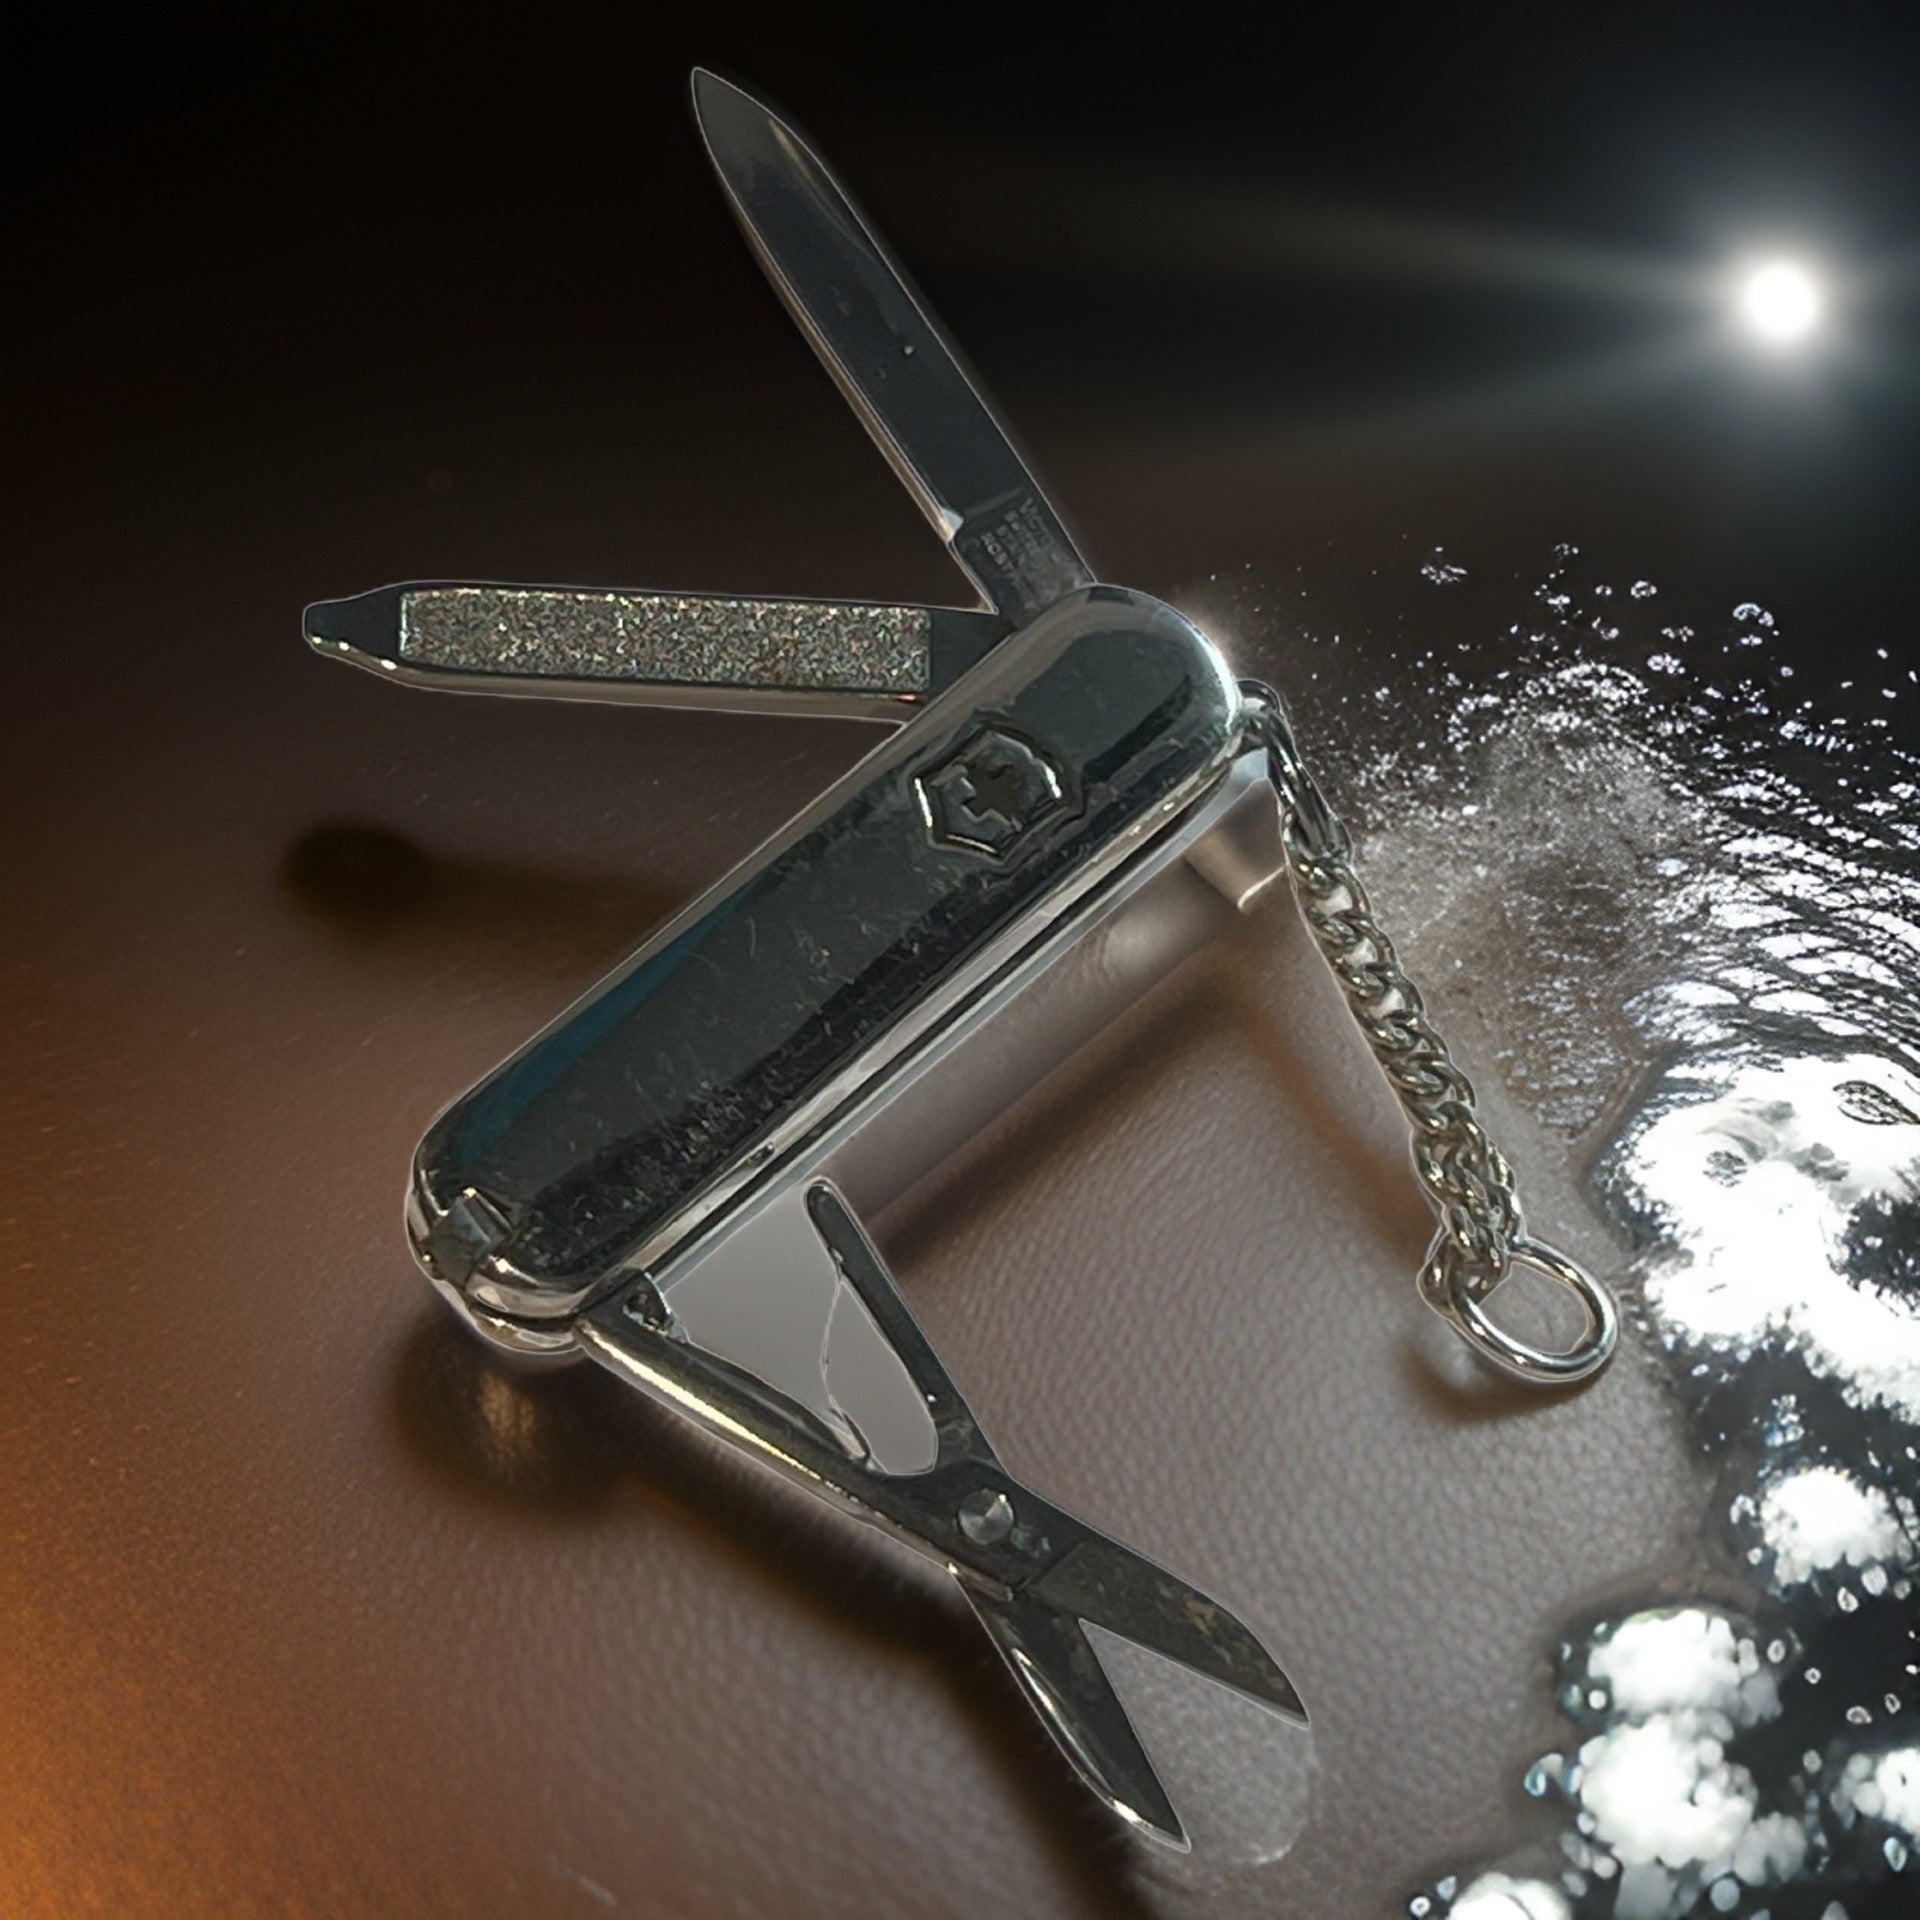 Tiffany & Co Estate Pocket Knife with Key chain 18k Silver TIF599 - Certified Fine Jewelry